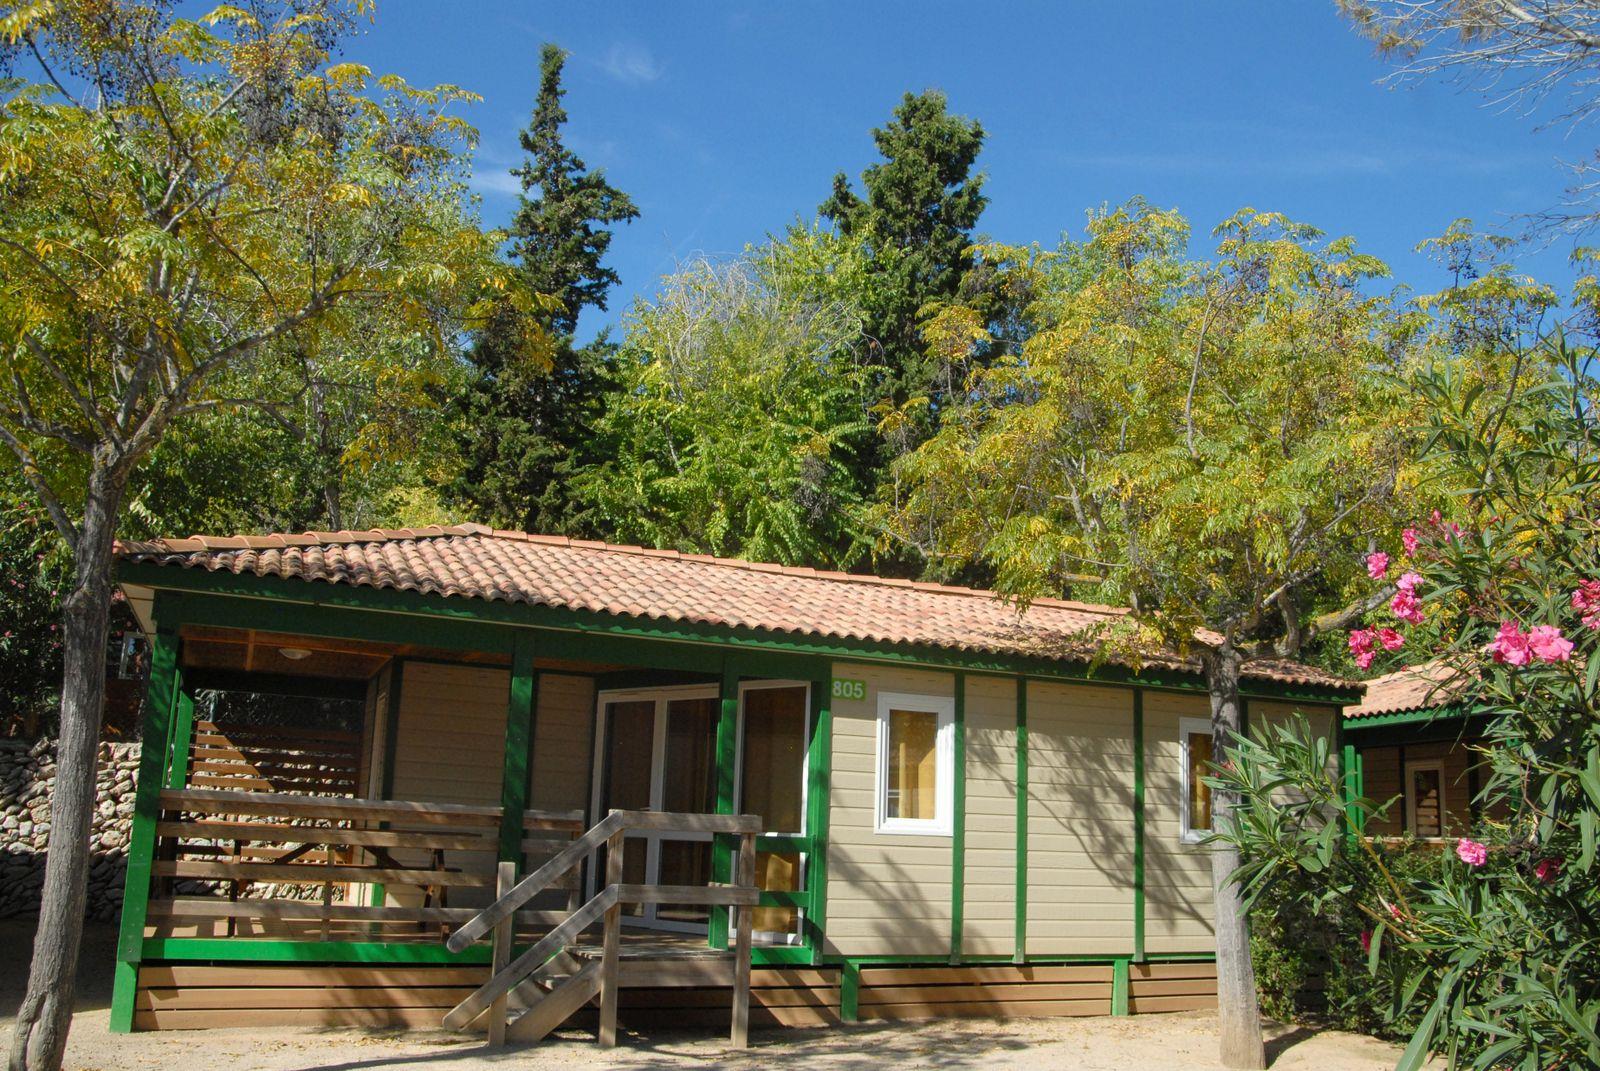 Location - S-800 (By Vilanova Park) - Chalet Excel 50 M2 - Camping Vilanova Park